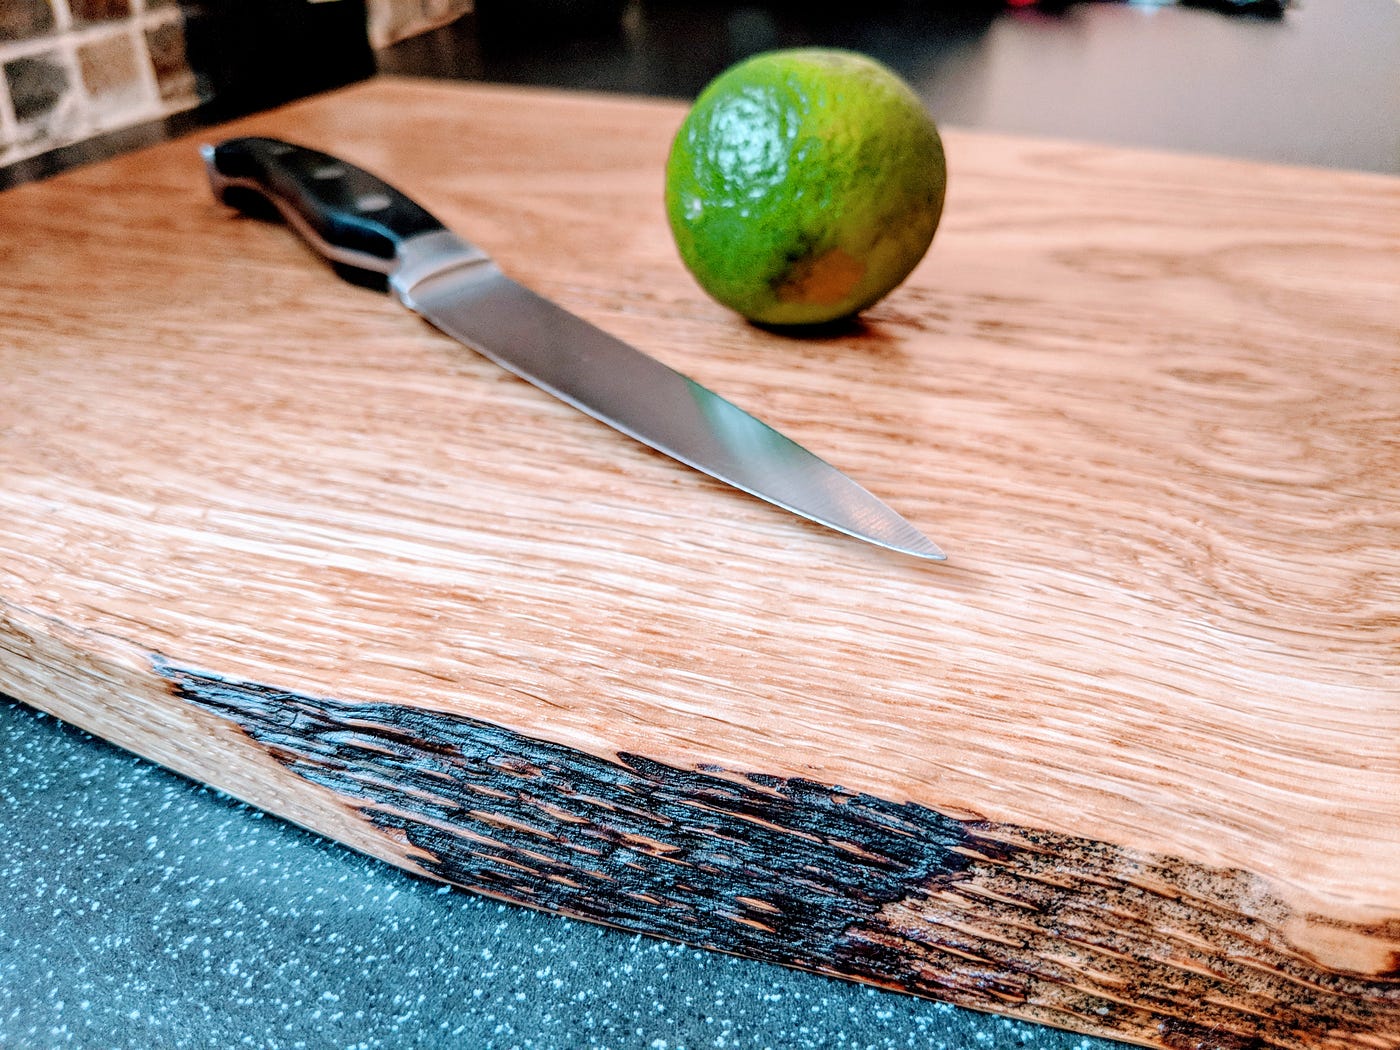 How to make an oak chopping board from scrap wood